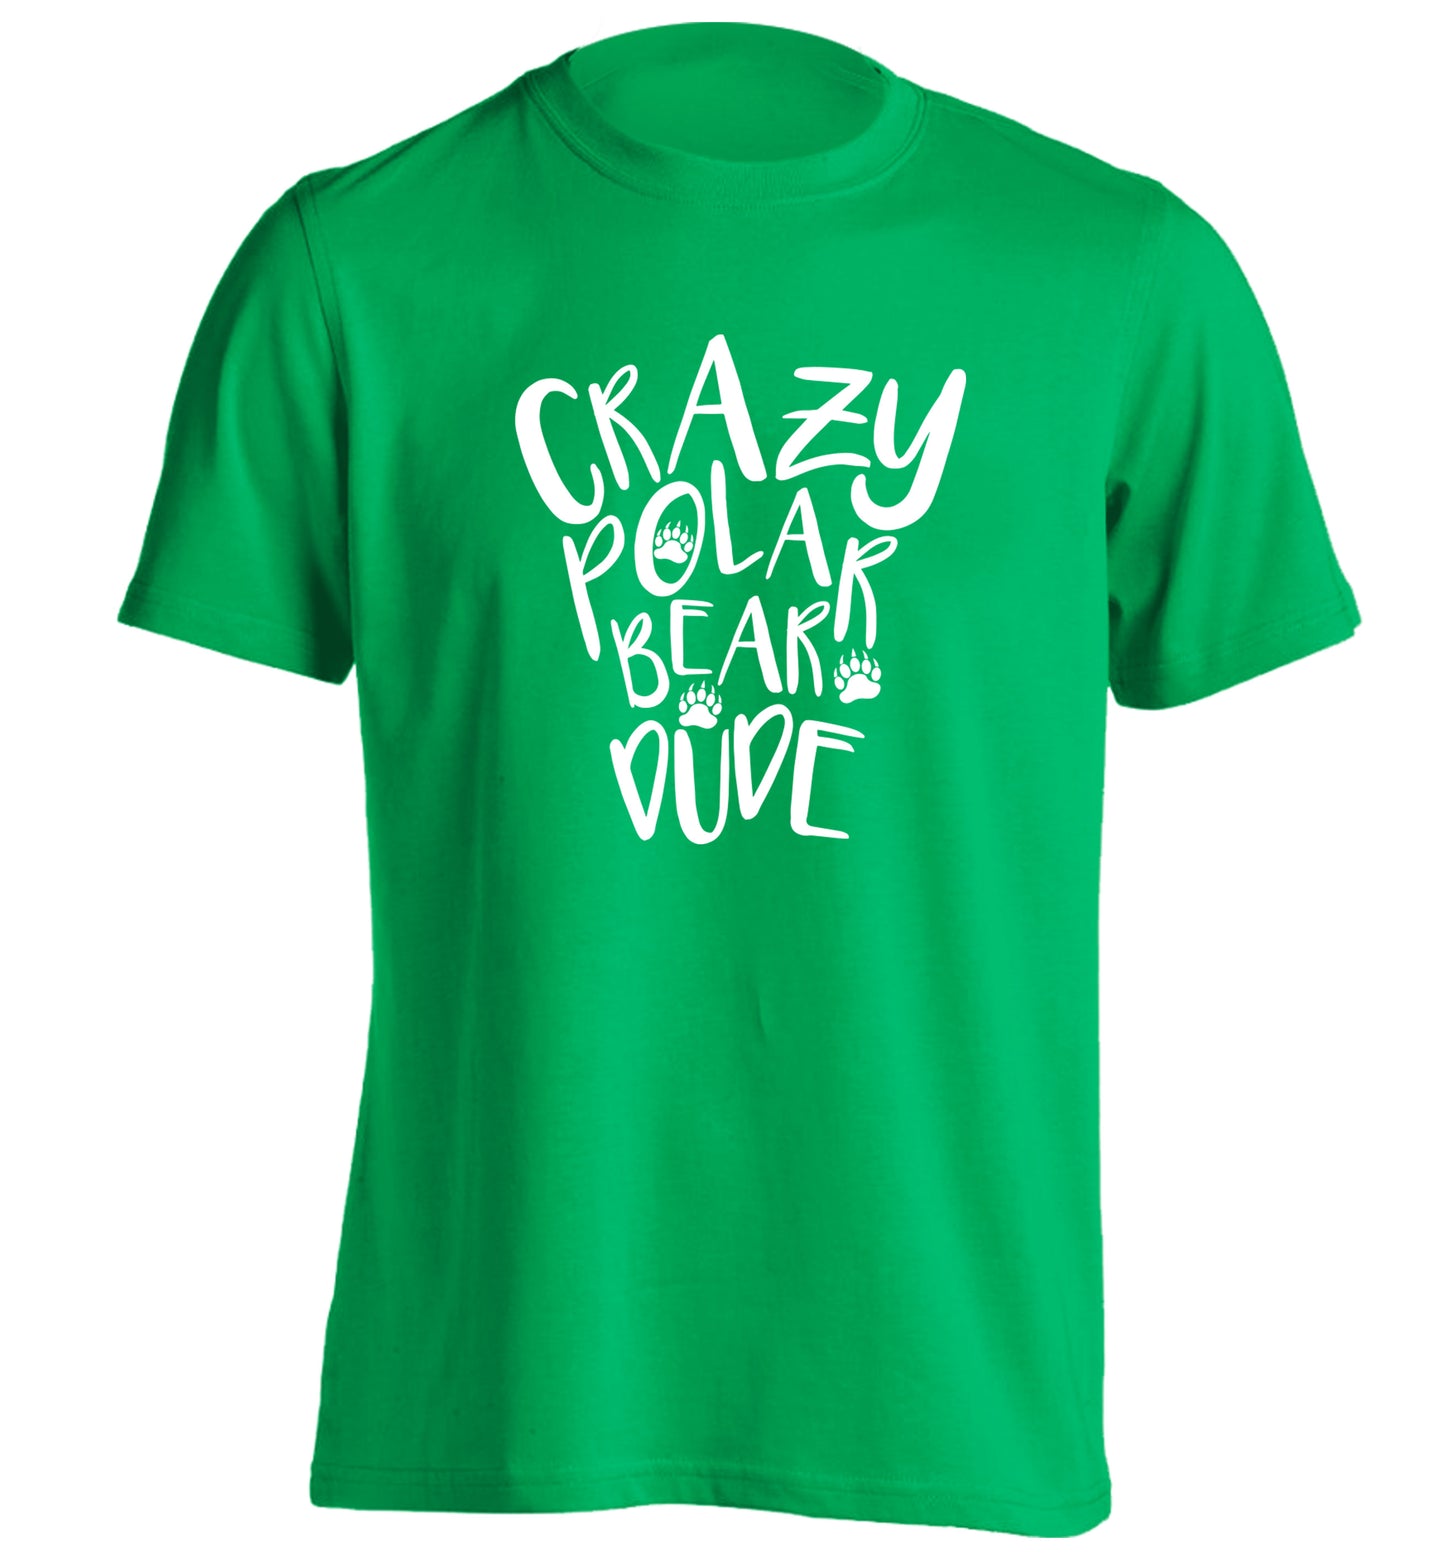 Crazy polar bear dude adults unisex green Tshirt 2XL